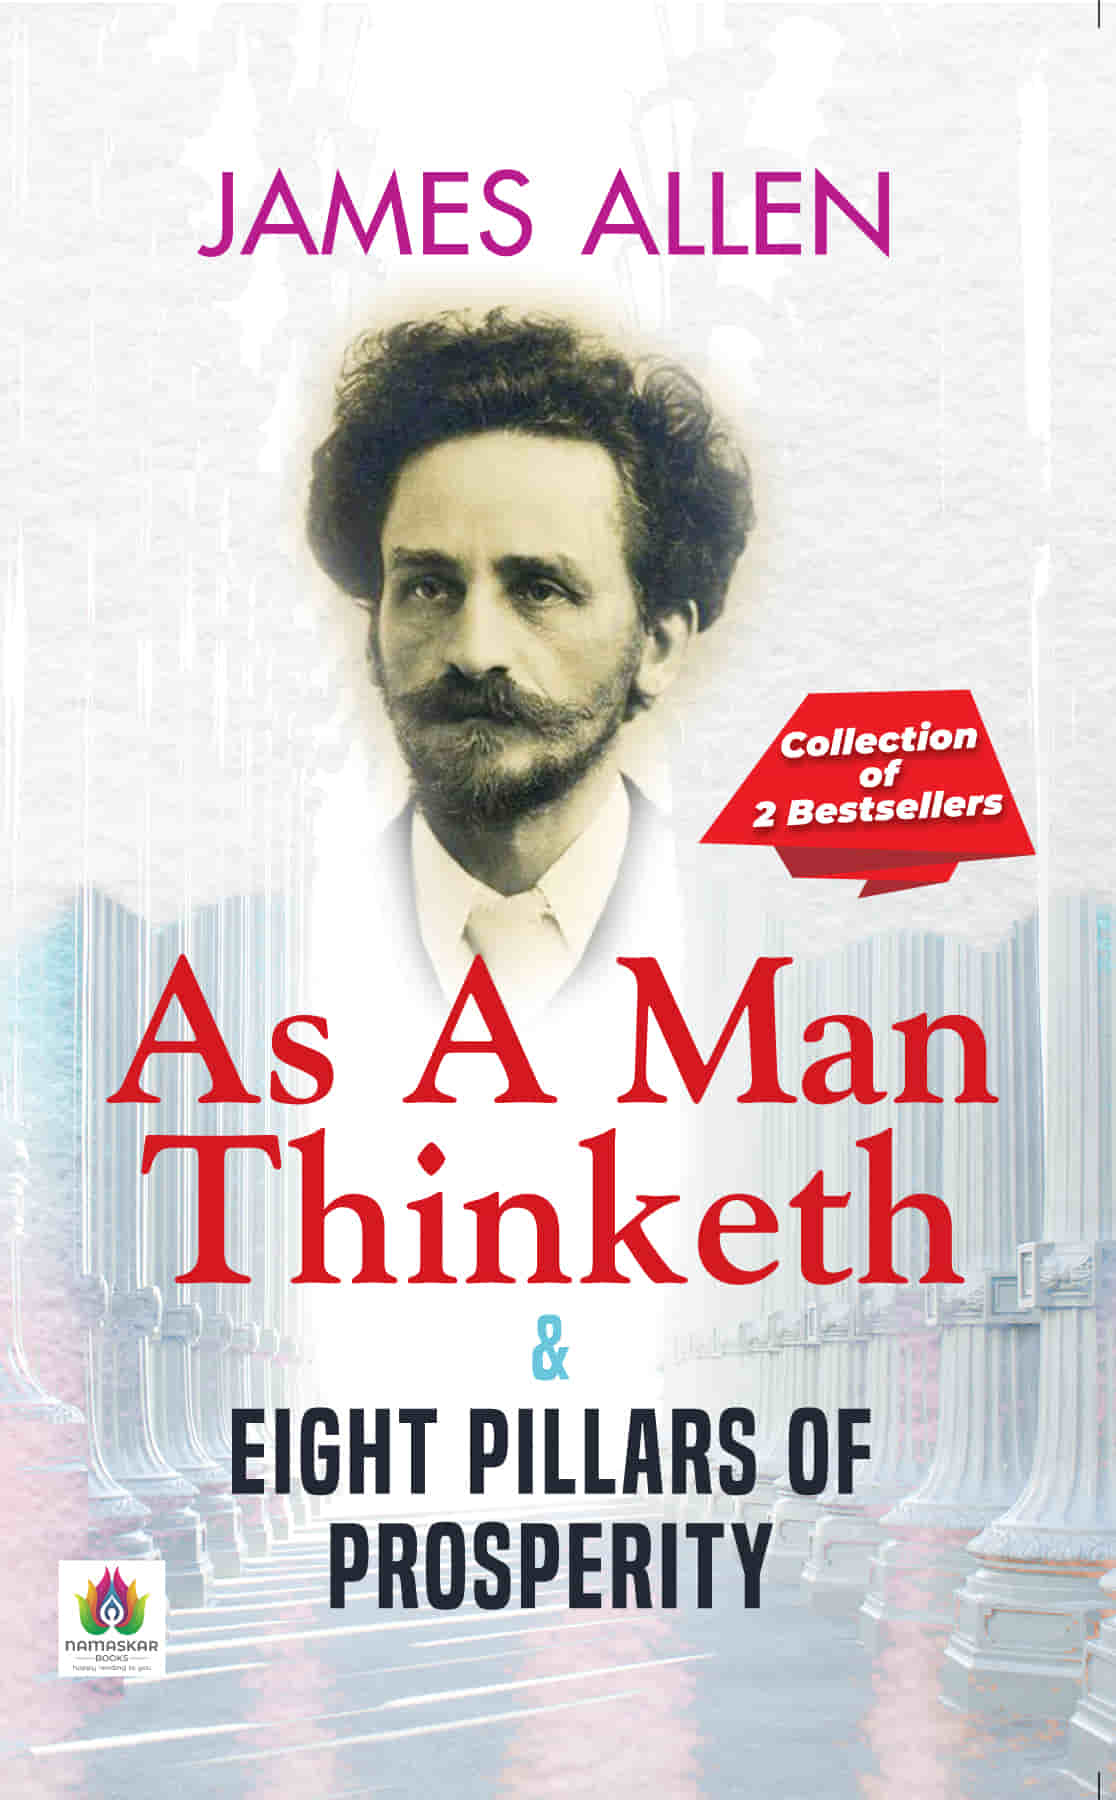 As A Man Thinketh & Eight Pillars of Prosperity